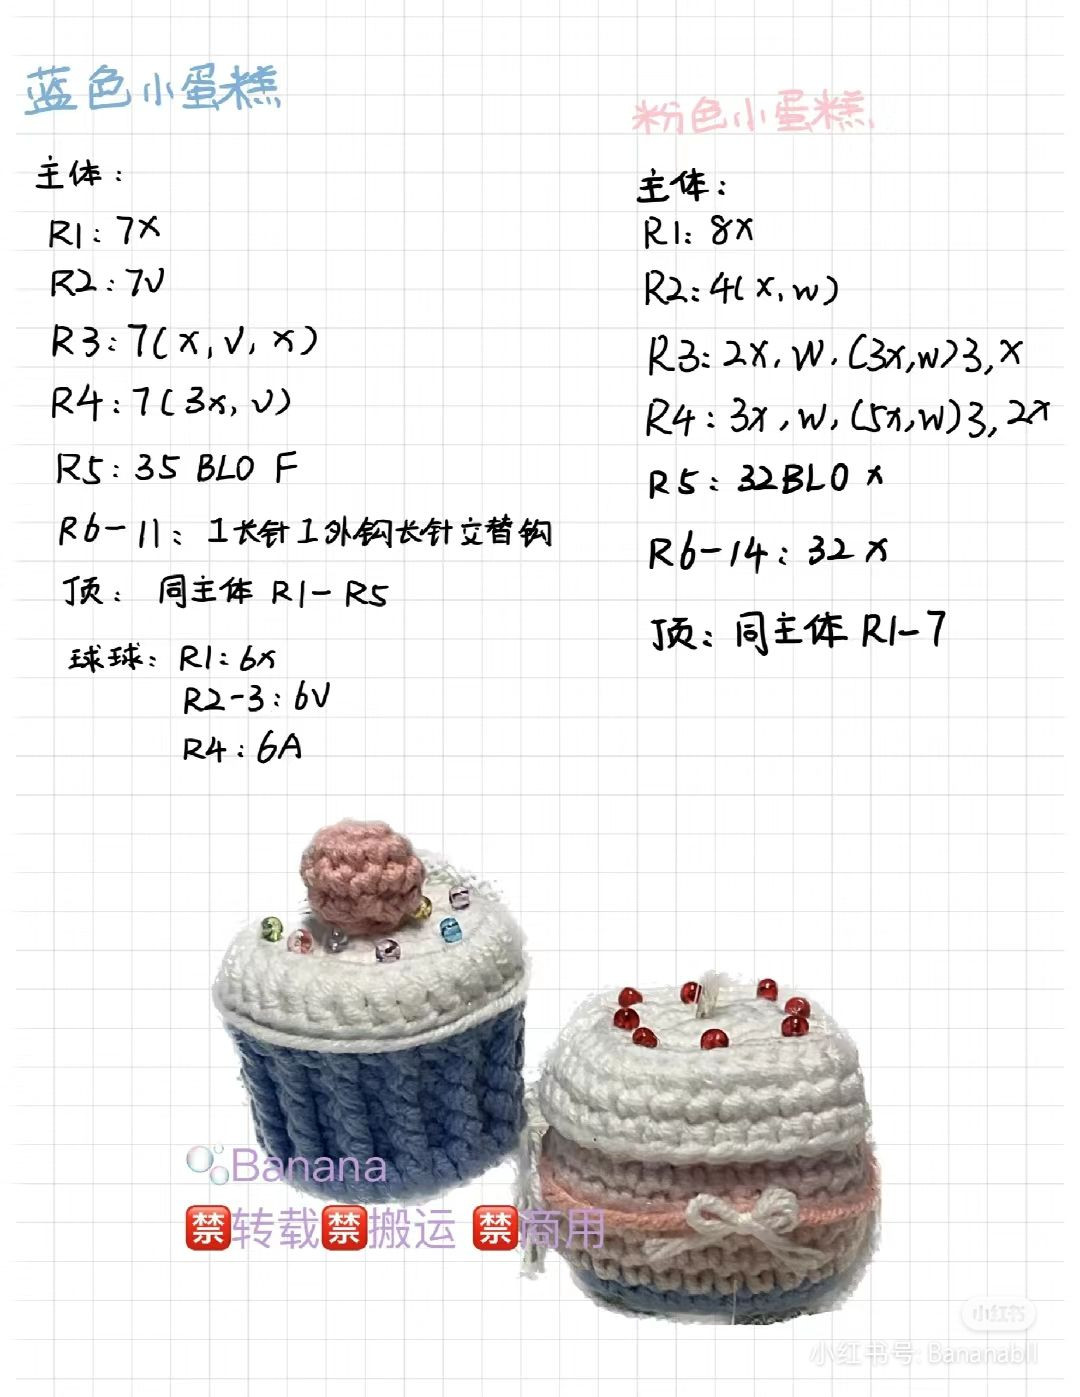 Seven-color cake crochet pattern